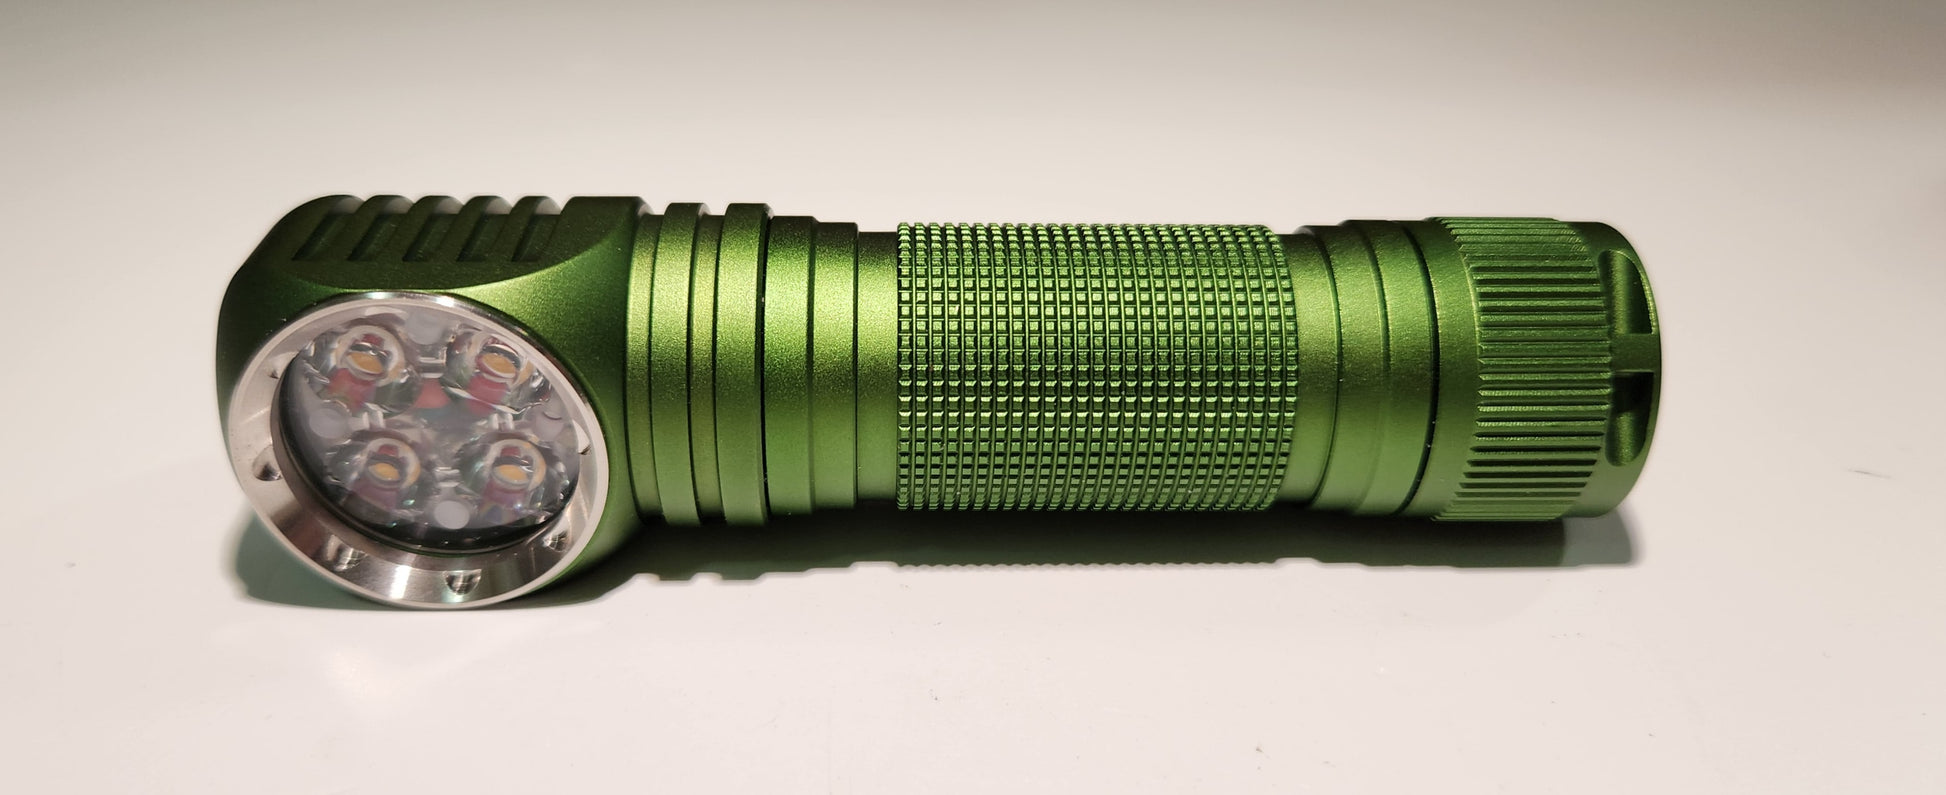 Emisar DW4 18650 Right Angle Work Light / LED Headlamp / LED Flashlight *CUSTOM BUILT-TO-ORDER* GREEN